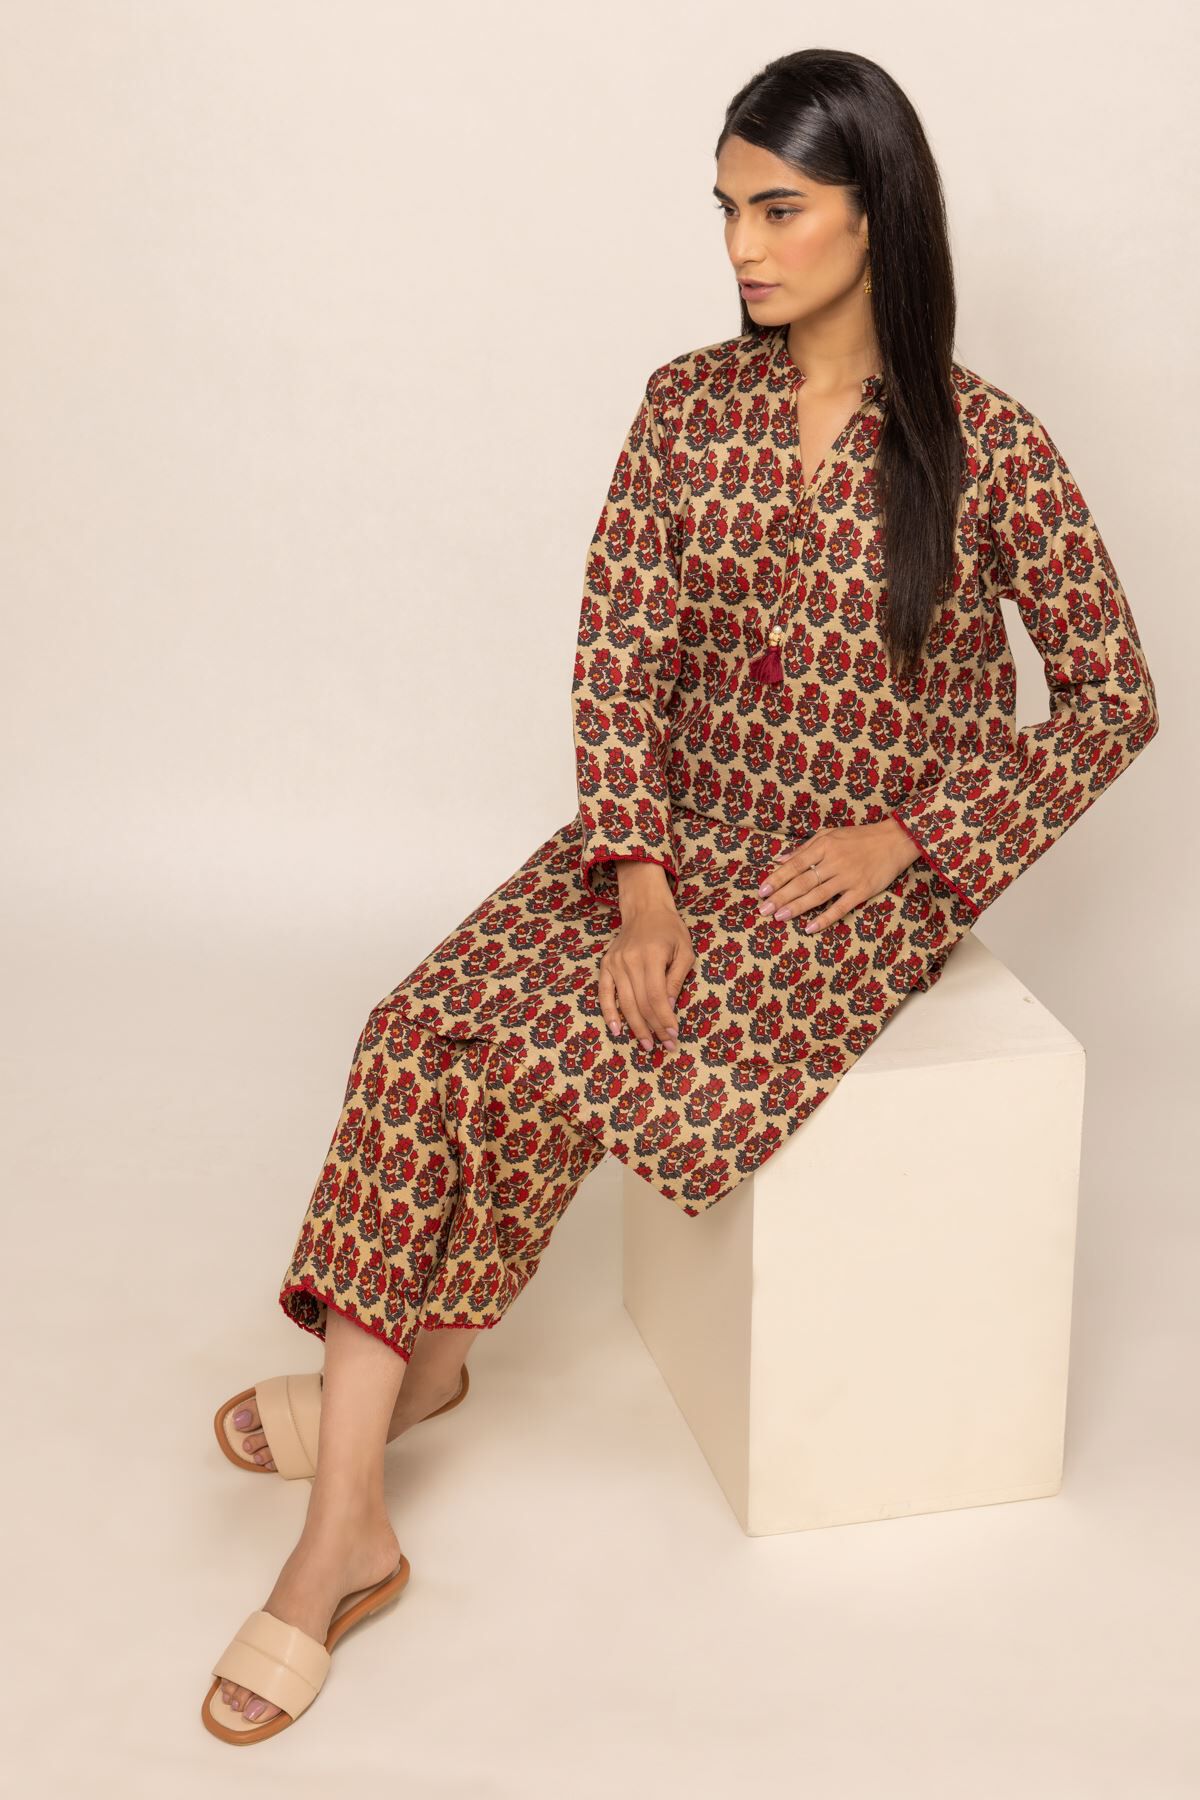 Ladies Net Designer Bajirao Mastani Anarkali Suit, Size: M, L & XL